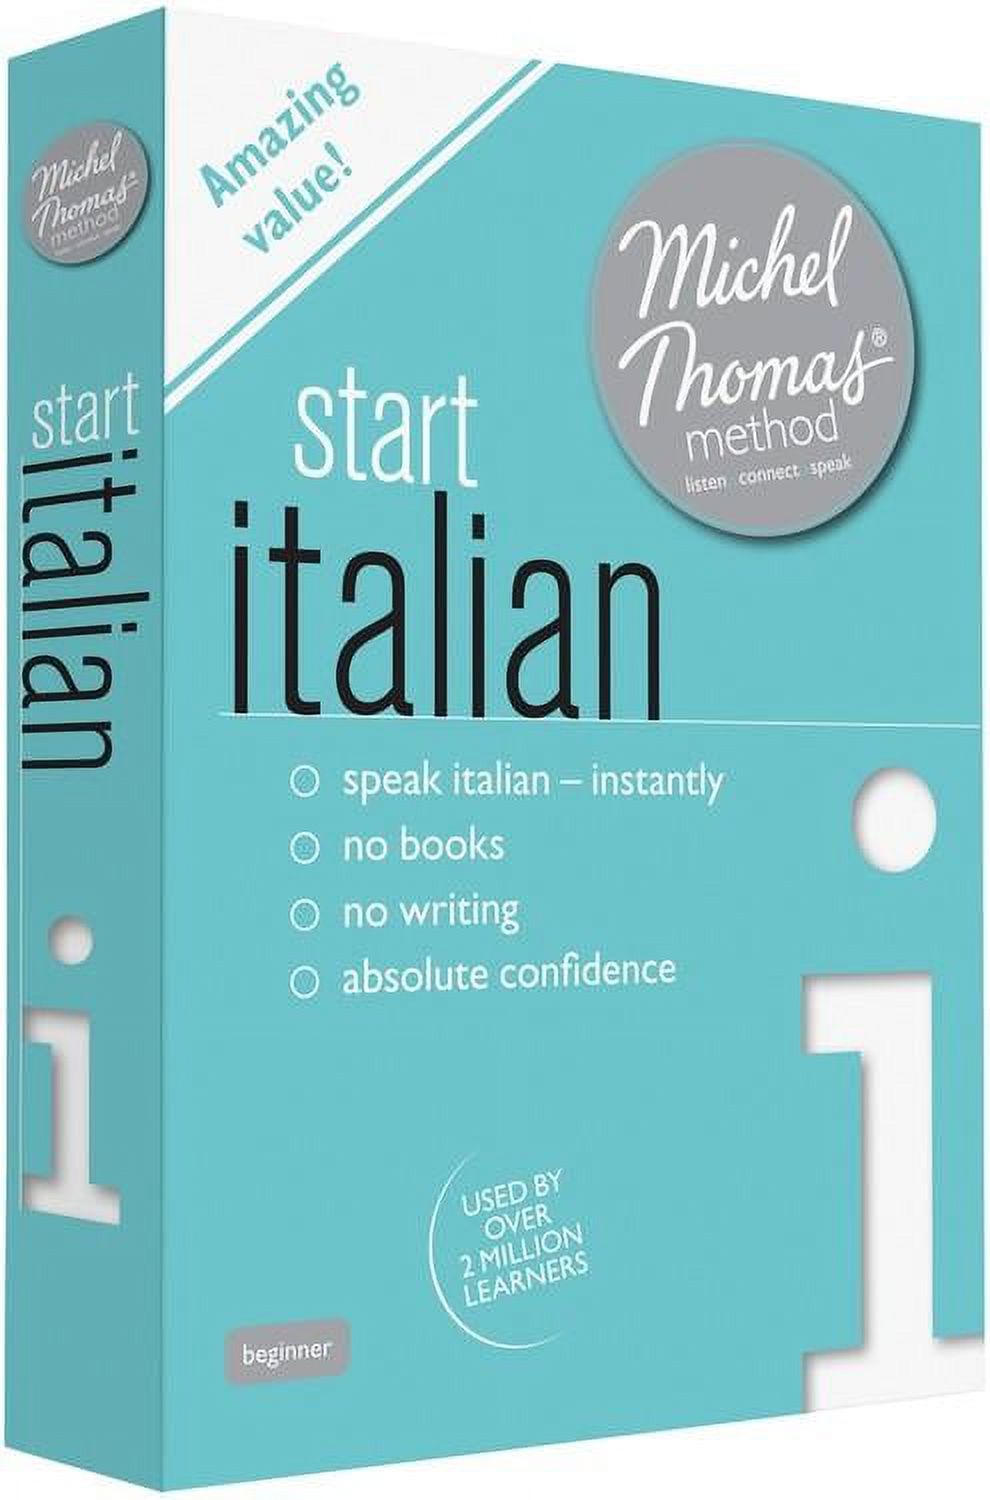 Start Italian (Learn Italian with the Michel Thomas Method) - image 1 of 1